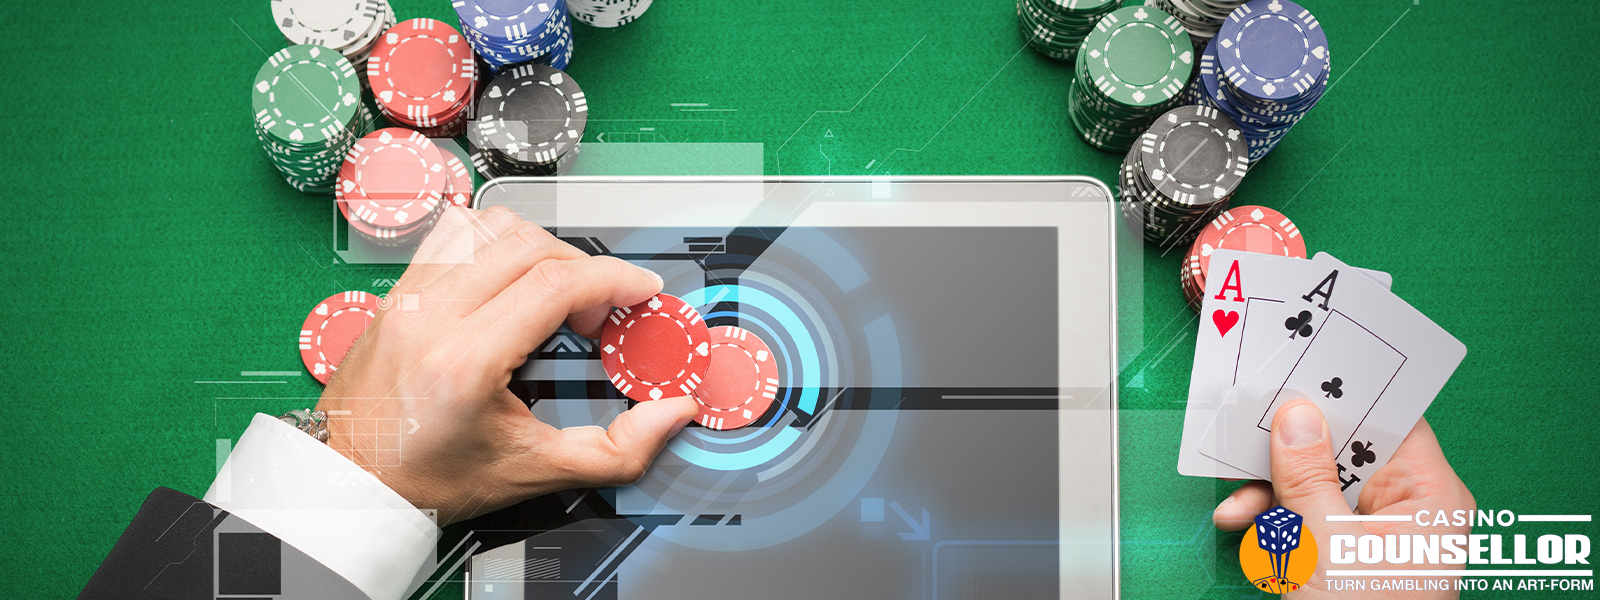 Teenage Online Gambling Addiction in the UK